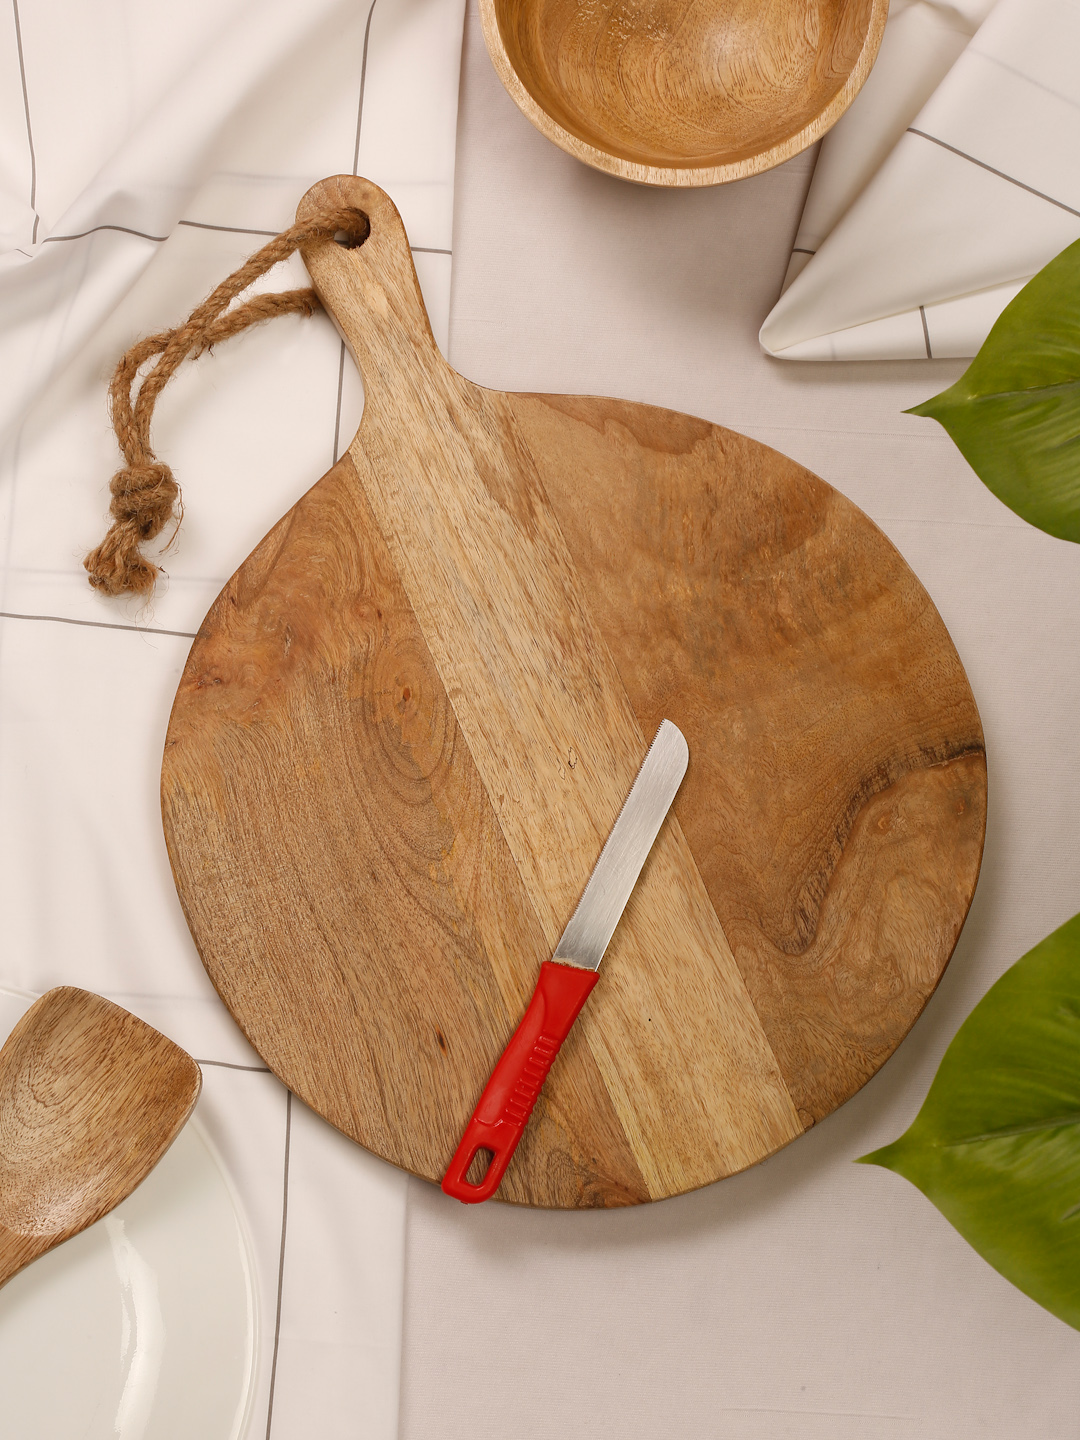 Organic wood chopping board